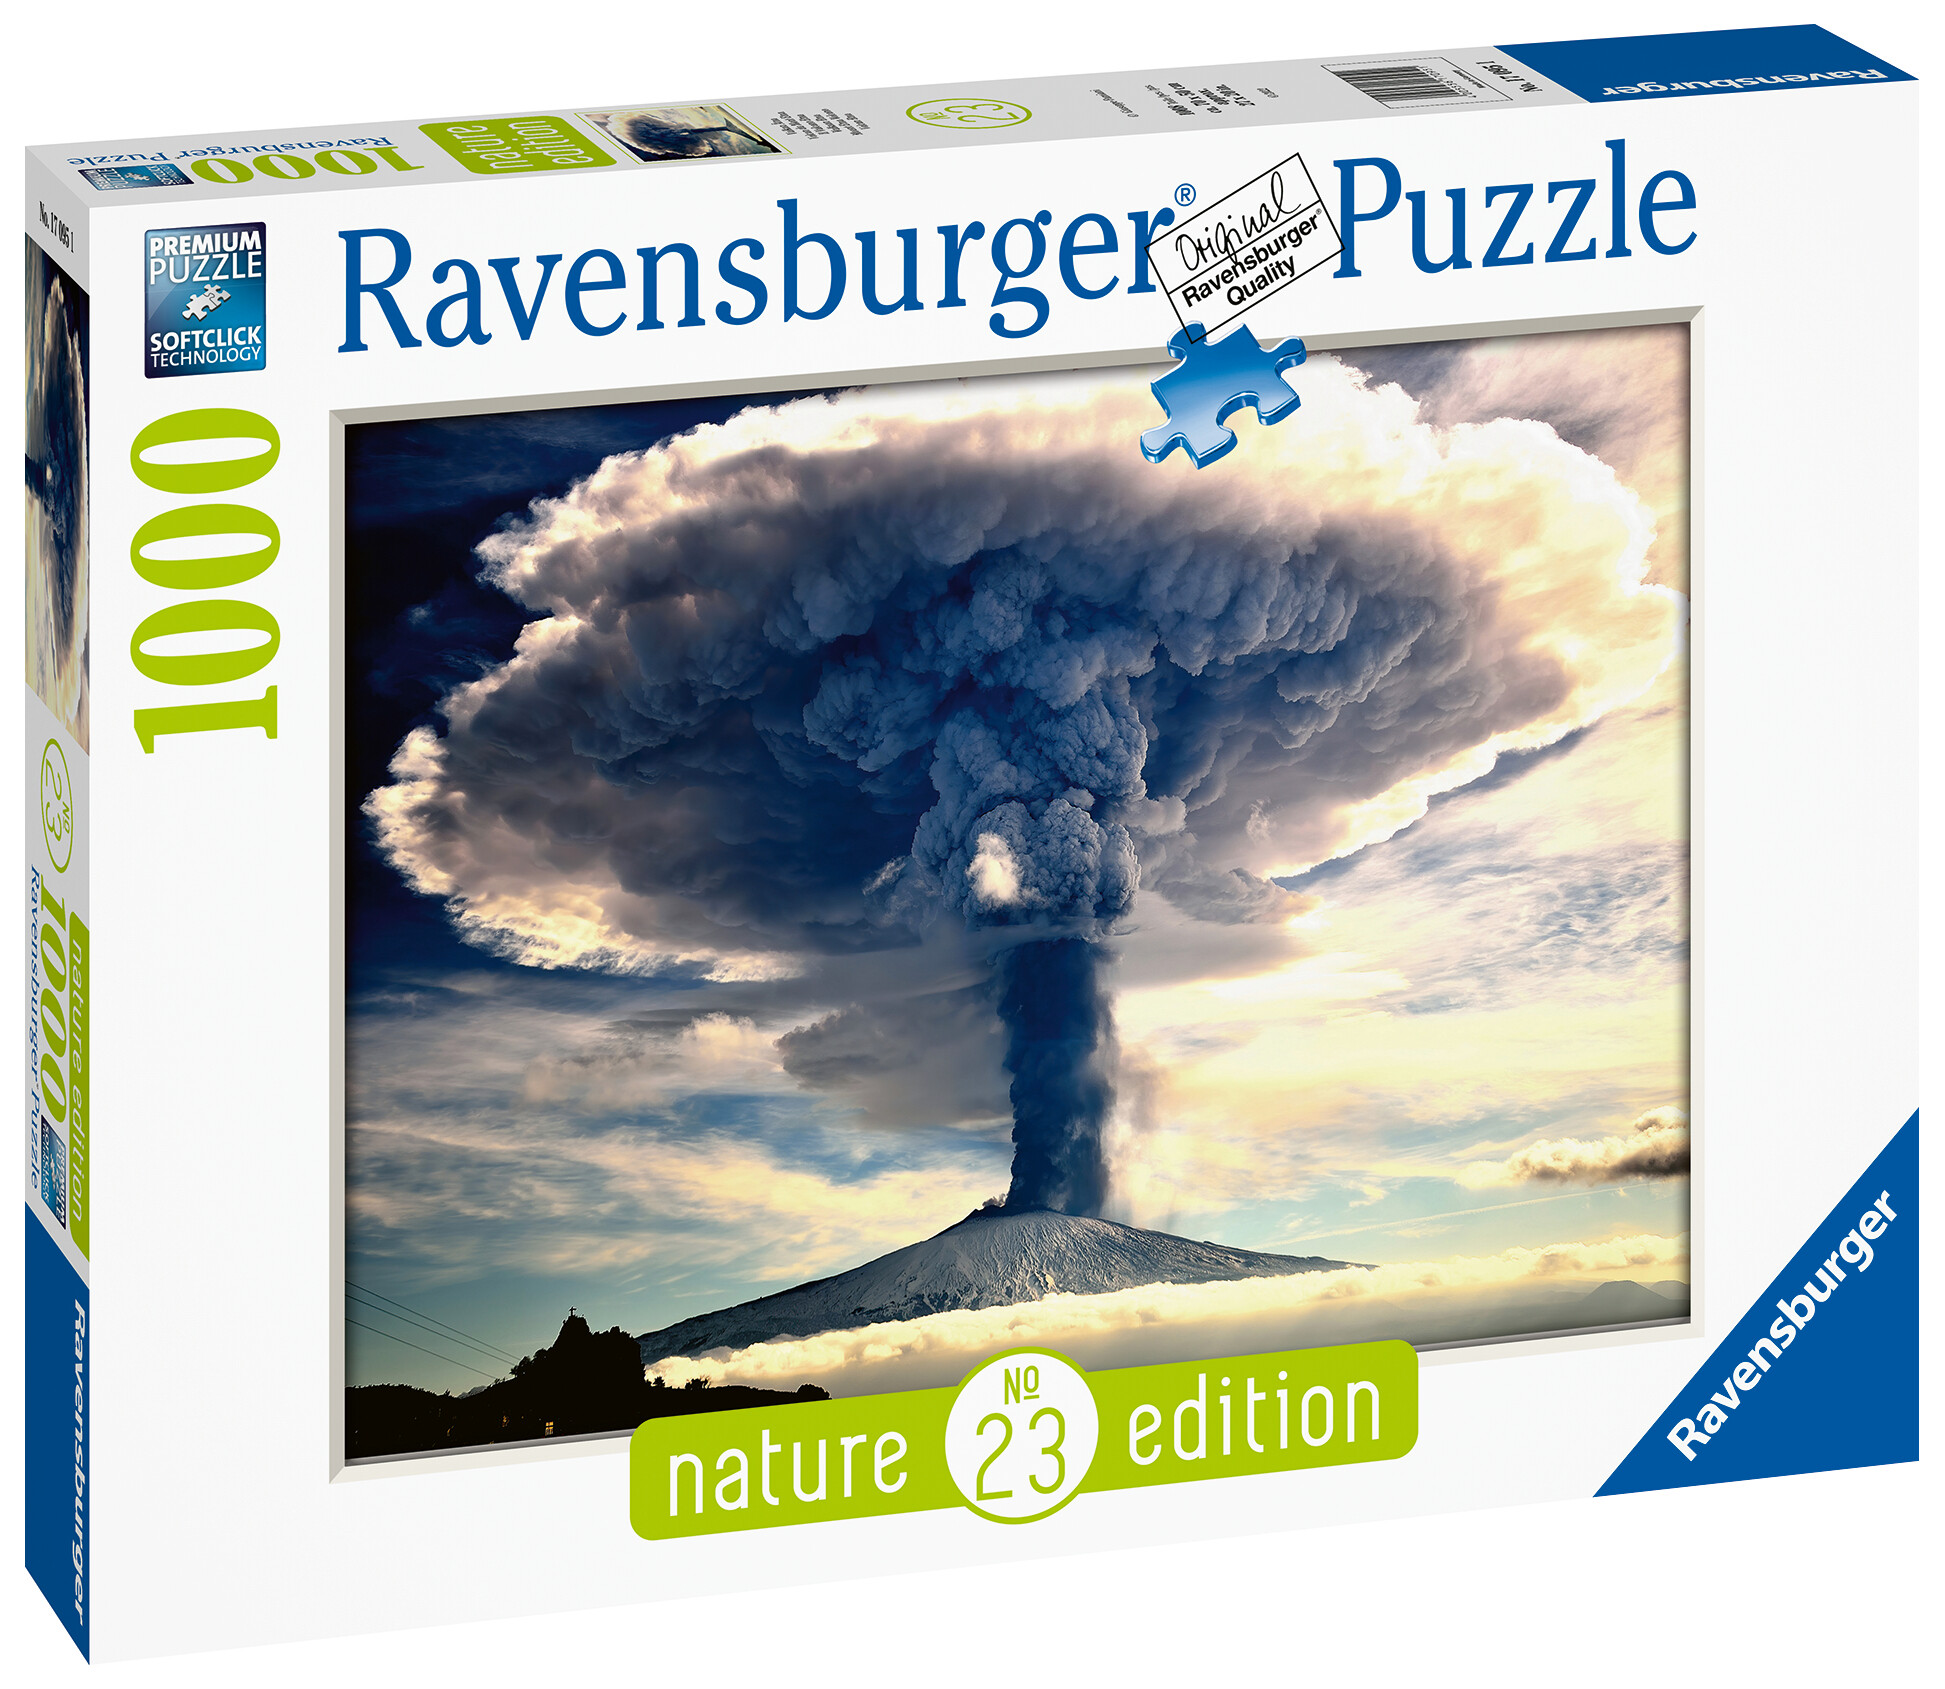 Ravensburger - puzzle vulcano etna, collezione nature edition, 1000 pezzi, puzzle adulti - RAVENSBURGER